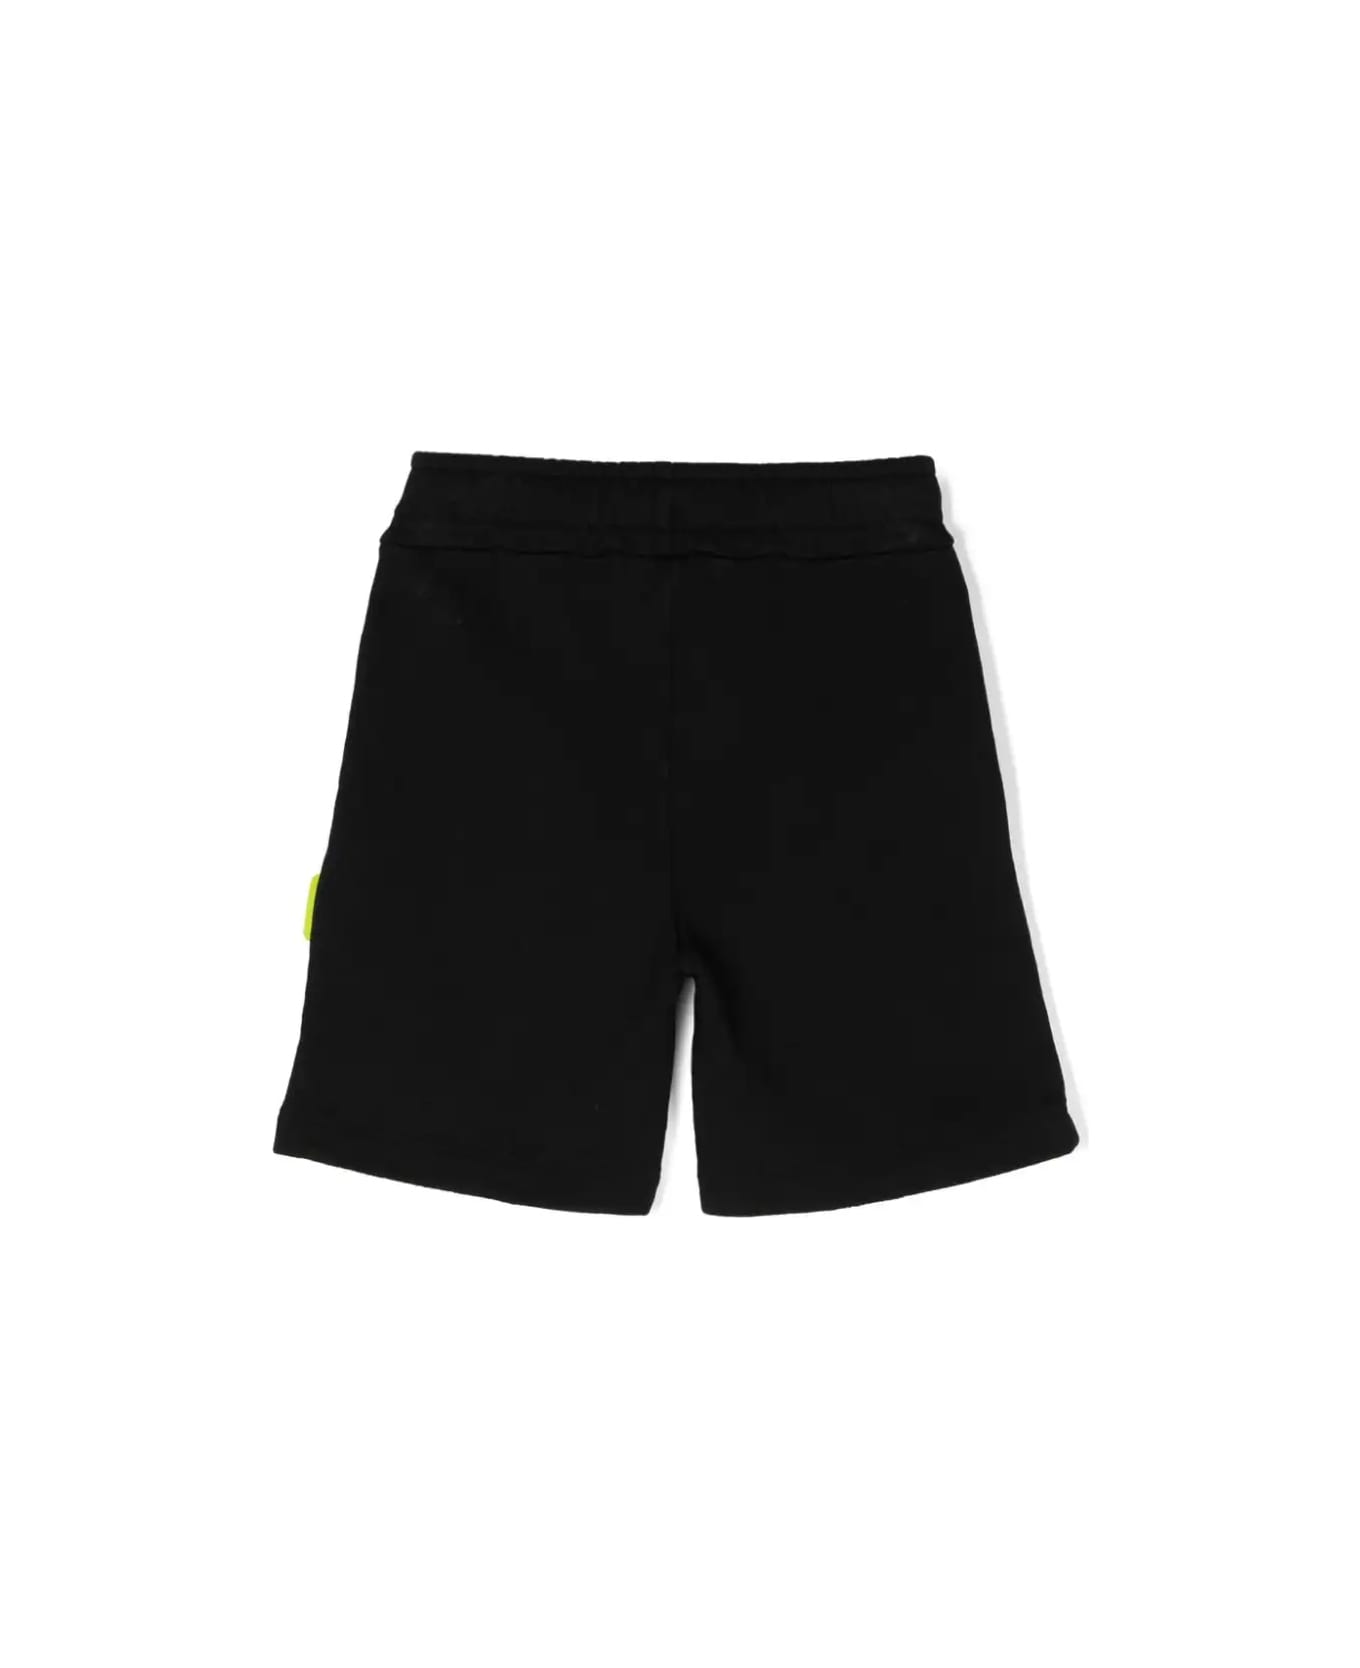 Barrow Black Cotton Shorts With Logo - Black